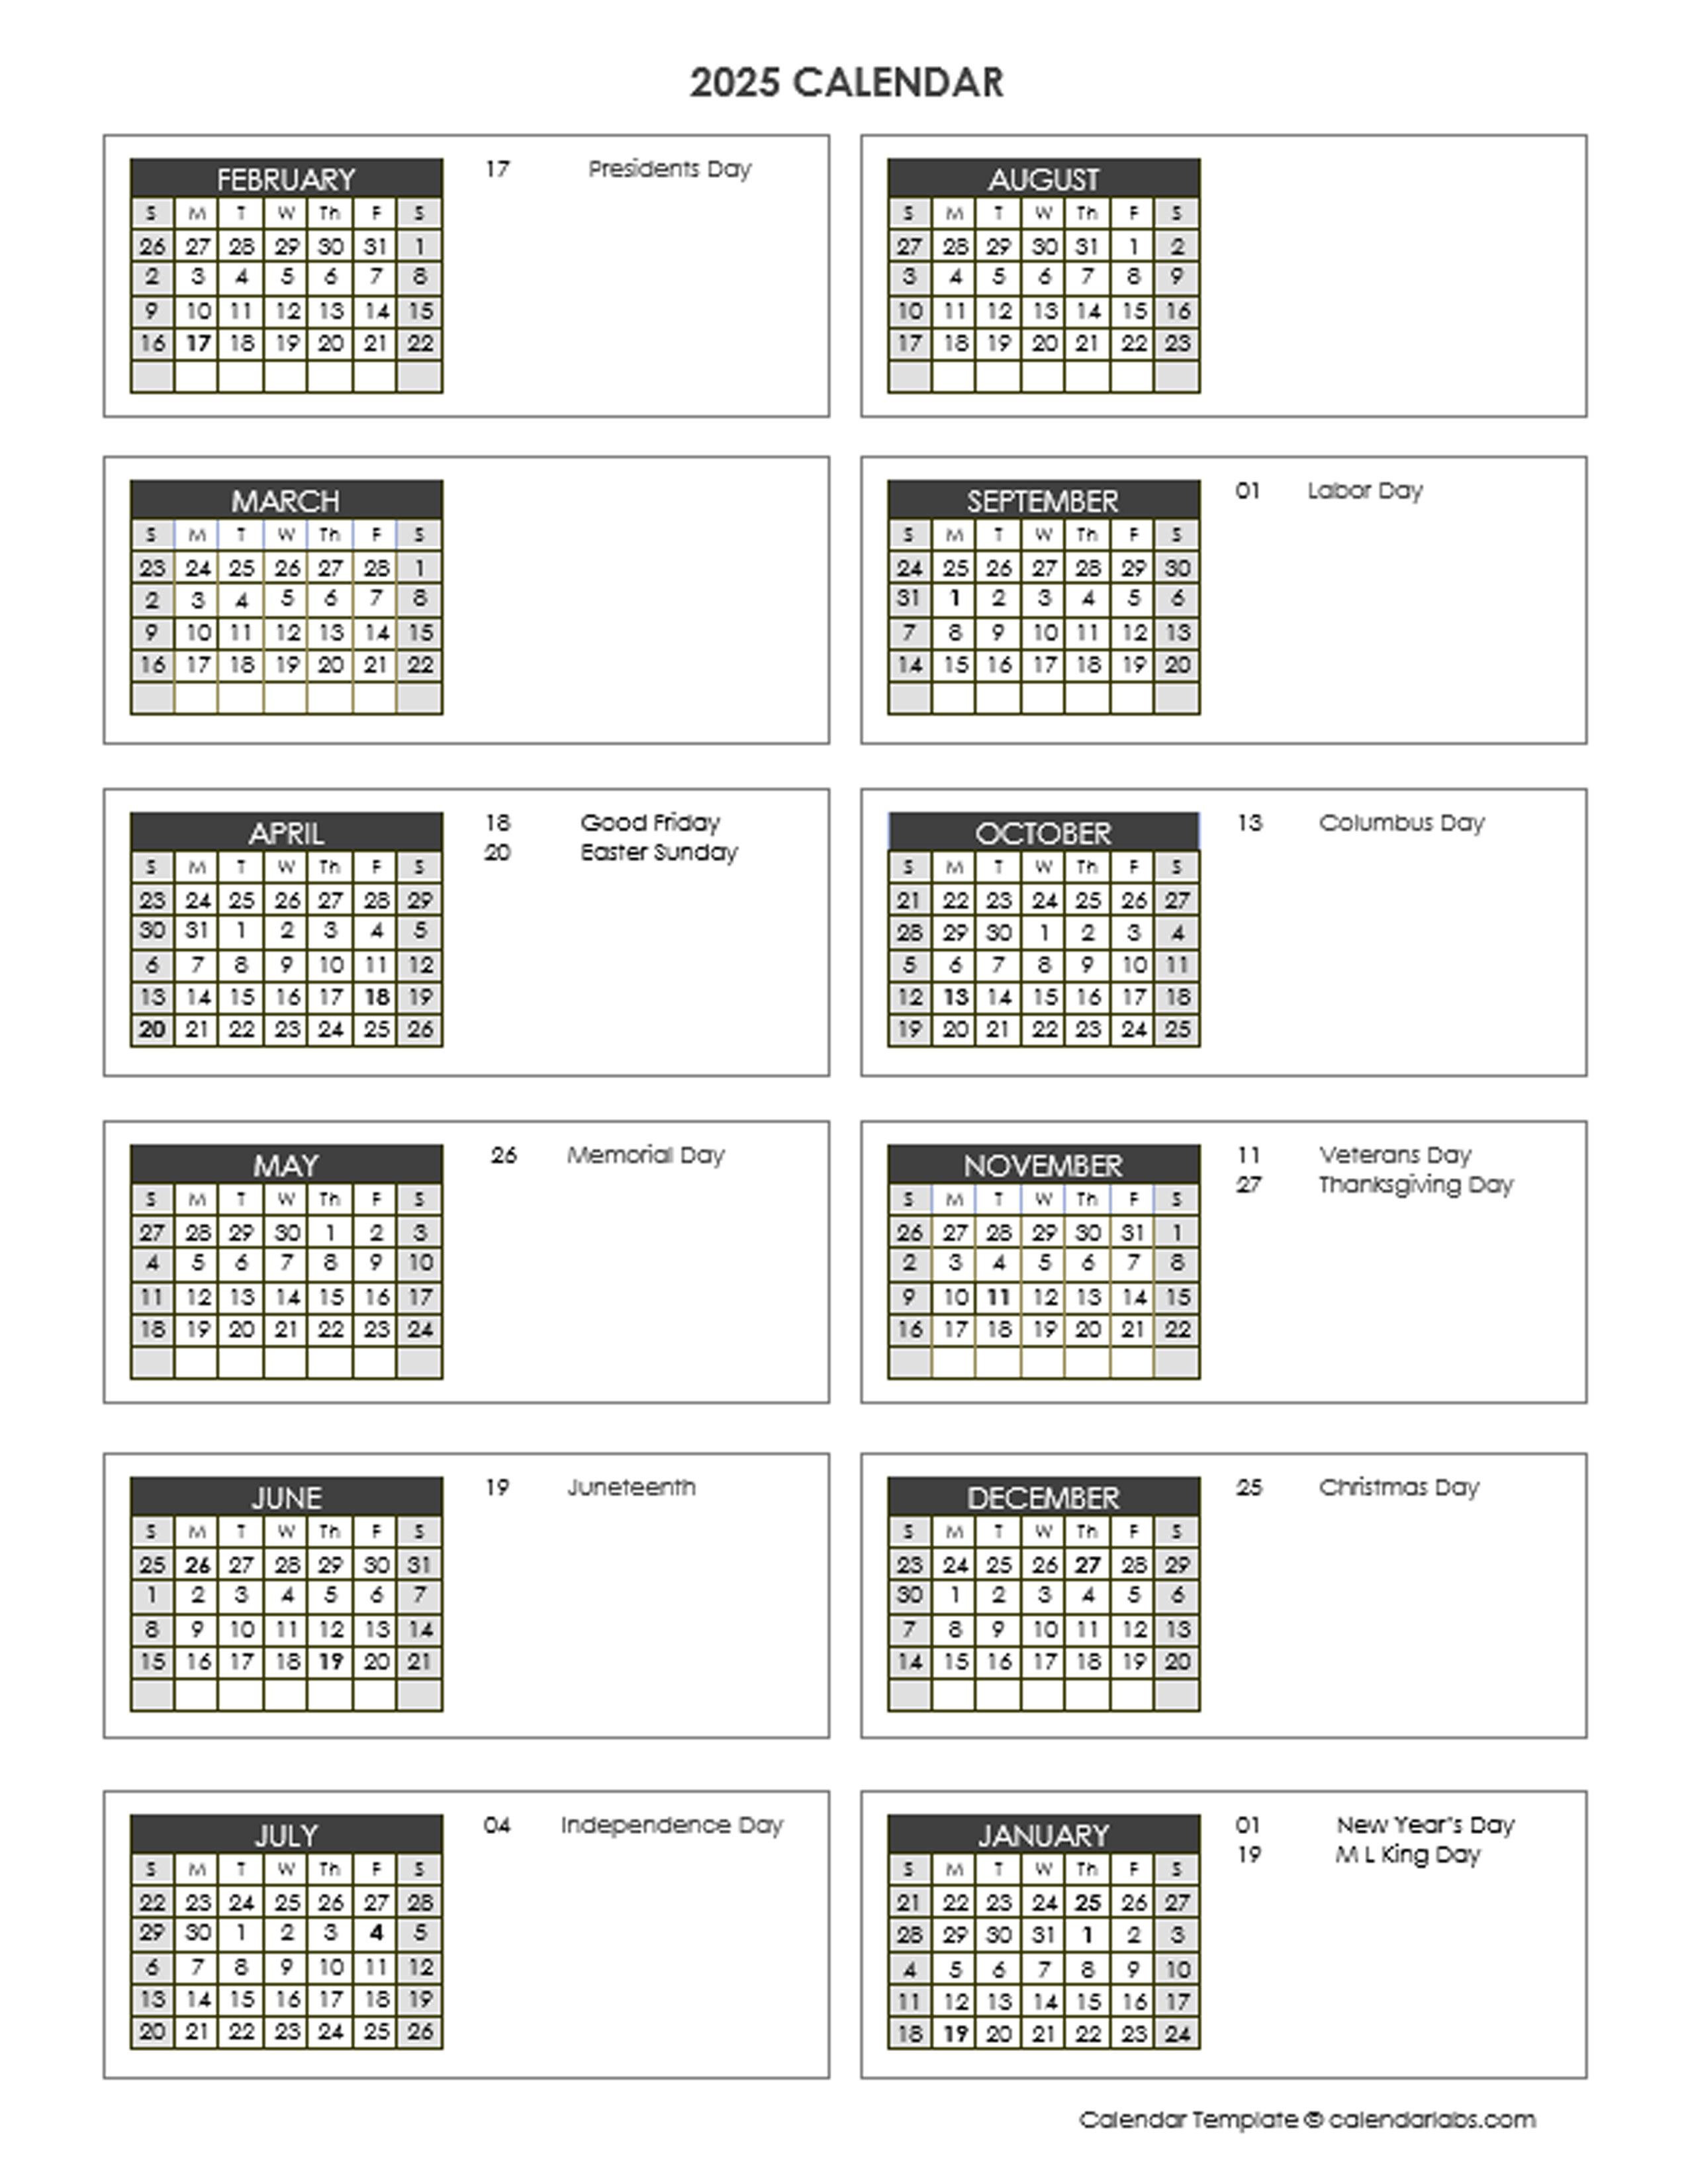 2025 Accounting Close Calendar 445 Free Printable Templates